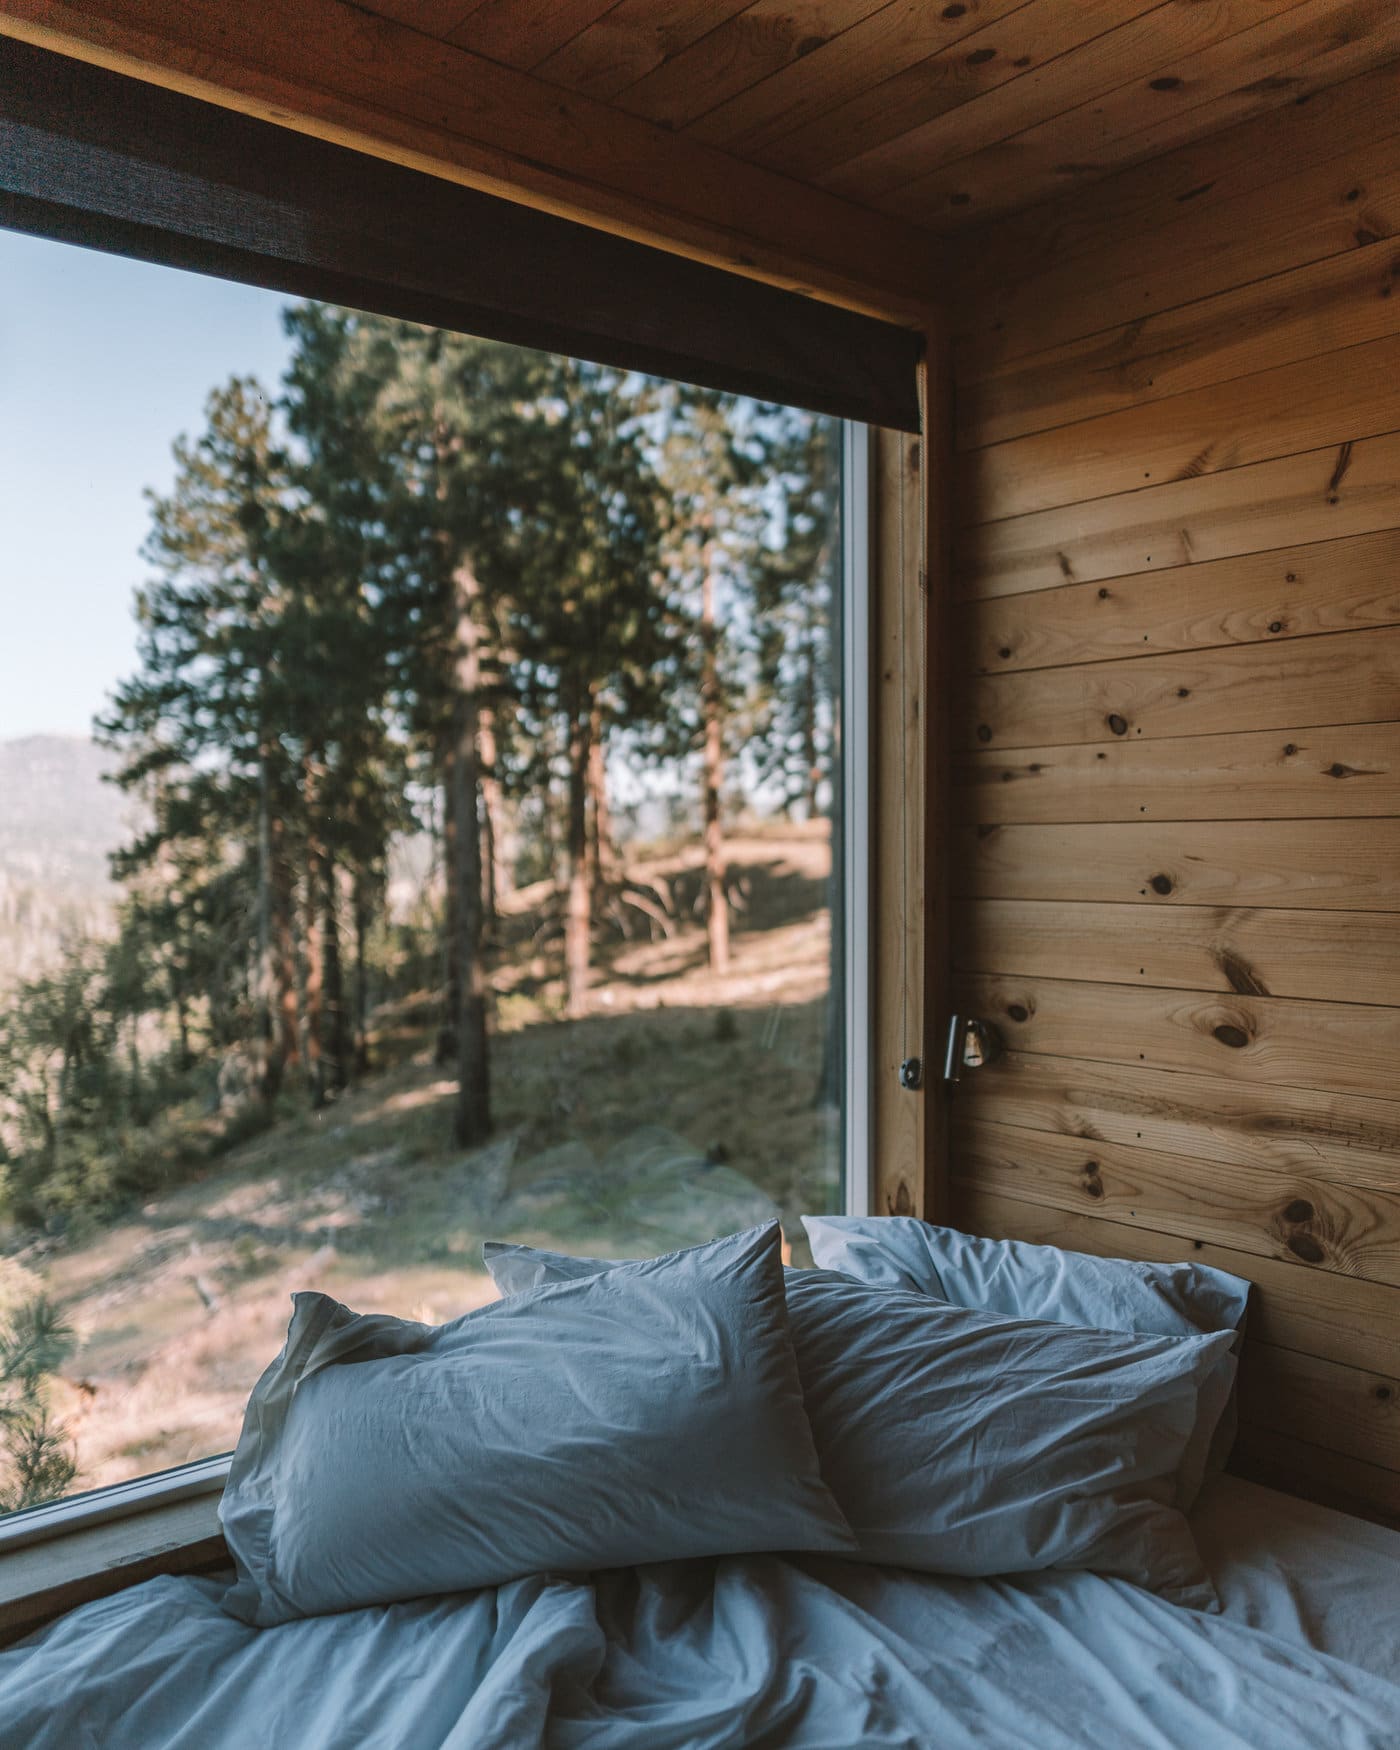 Cozy bed inside the Getaway cabin - romantic getaway from LA